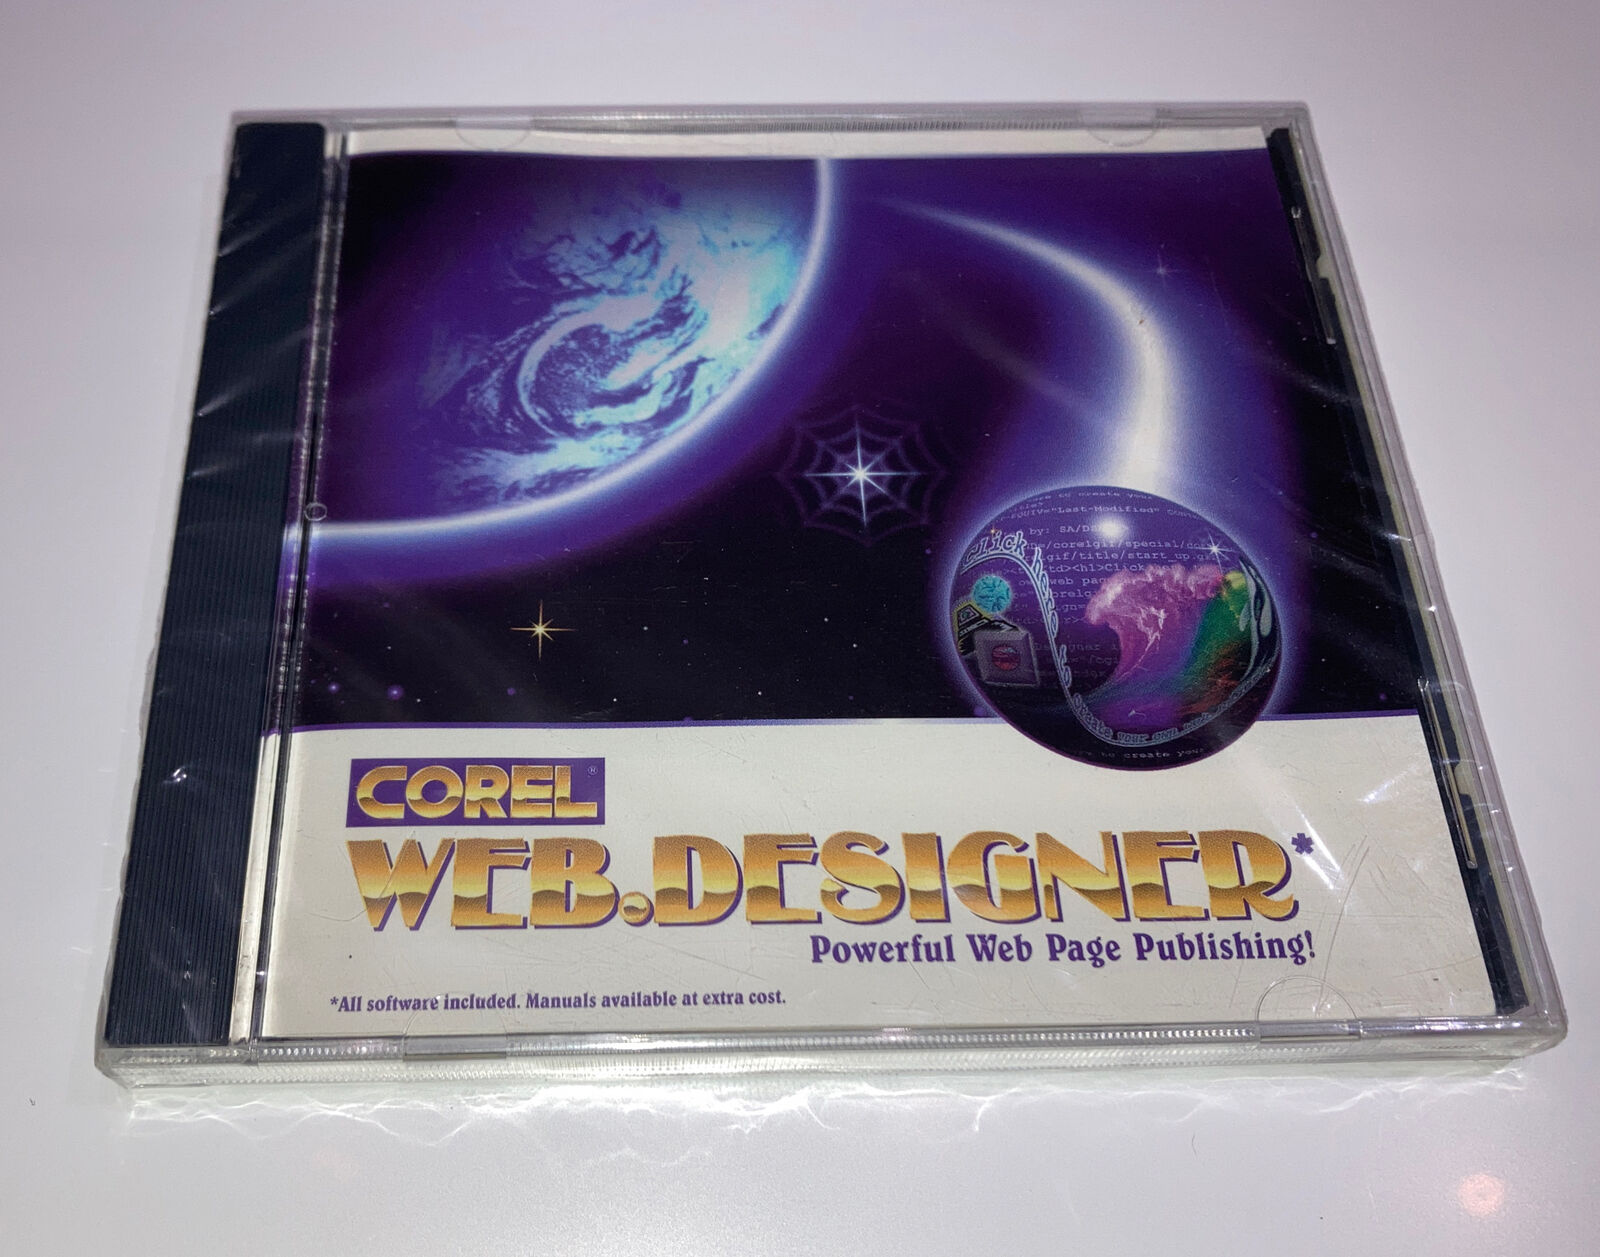 Corel Web.Designer - Web Designer Web Page Publishing (PC, 1996) NOS - New